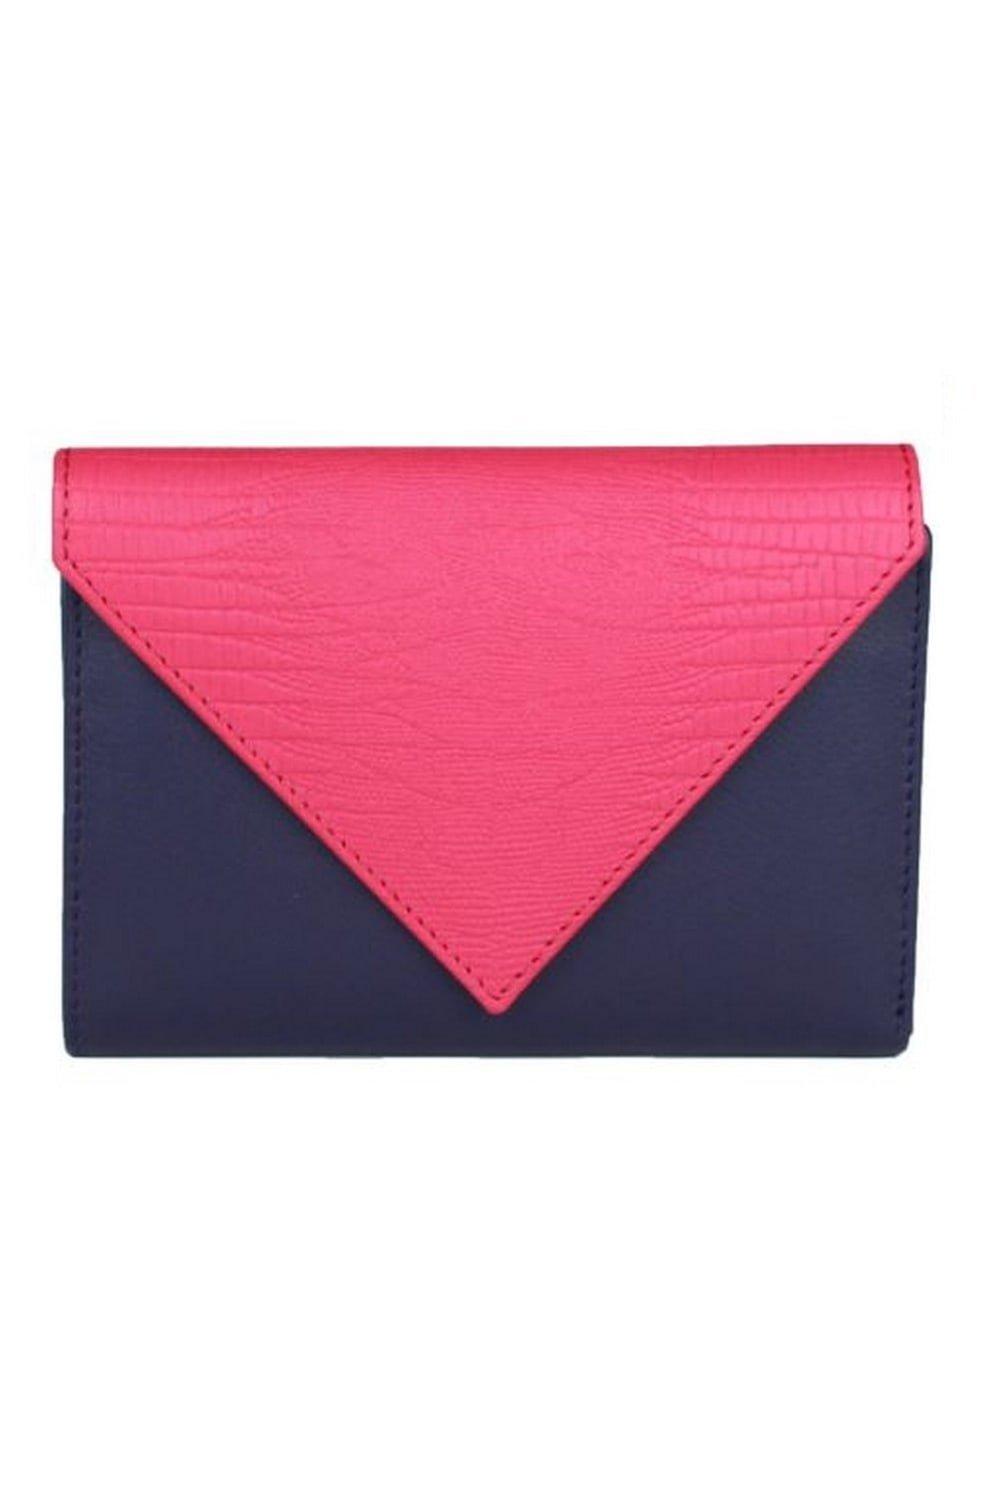 Кошелек Belle в стиле конверта Eastern Counties Leather, фиолетовый кошелек leanne с контрастной вставкой eastern counties leather розовый